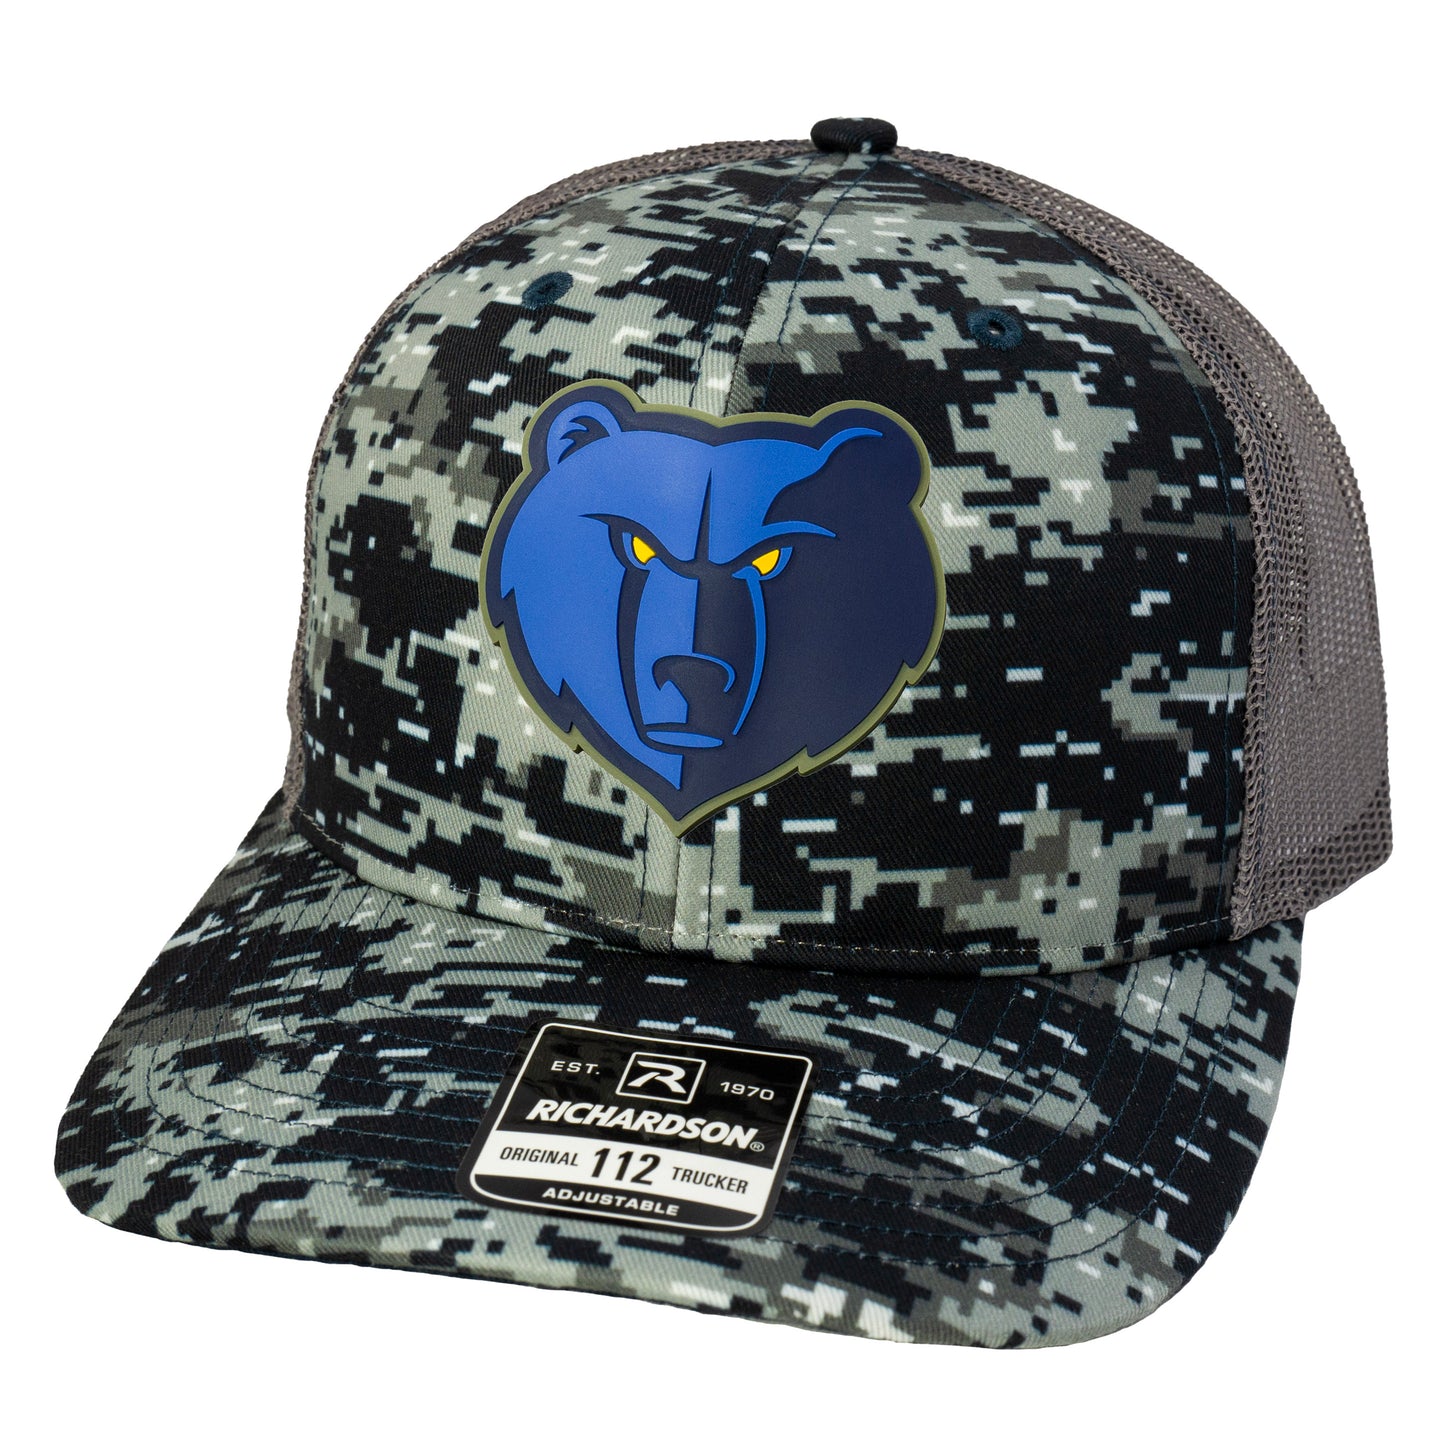 Memphis Grizzlies 3D Patterned Snapback Trucker Hat- Black Digital Camo - Ten Gallon Hat Co.